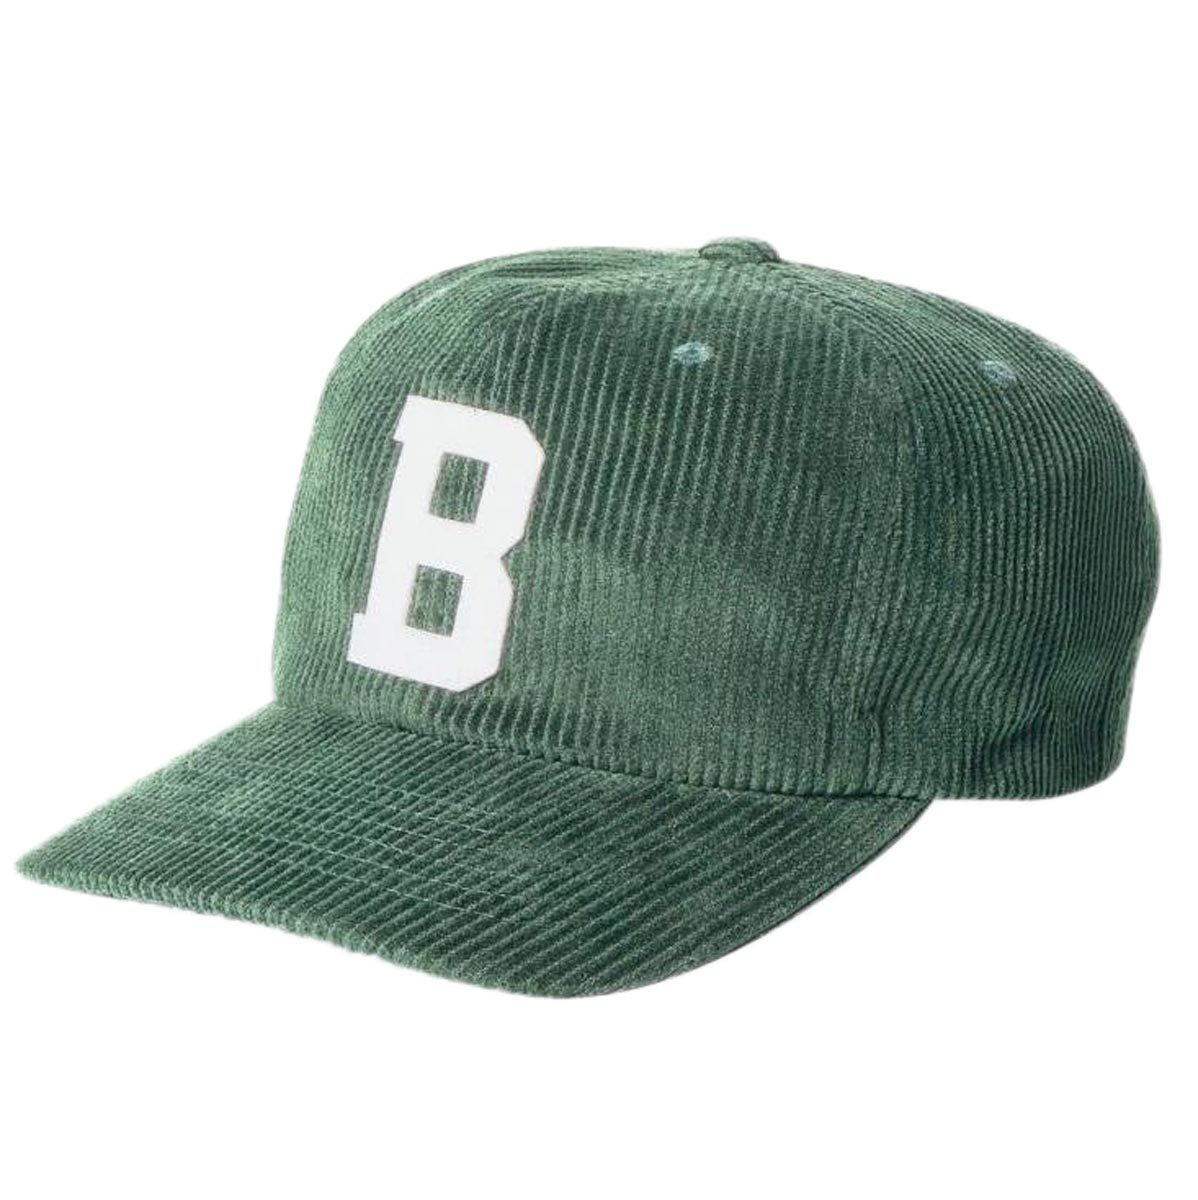 Brixton Big B Mp Hat - Emerald Cord image 1